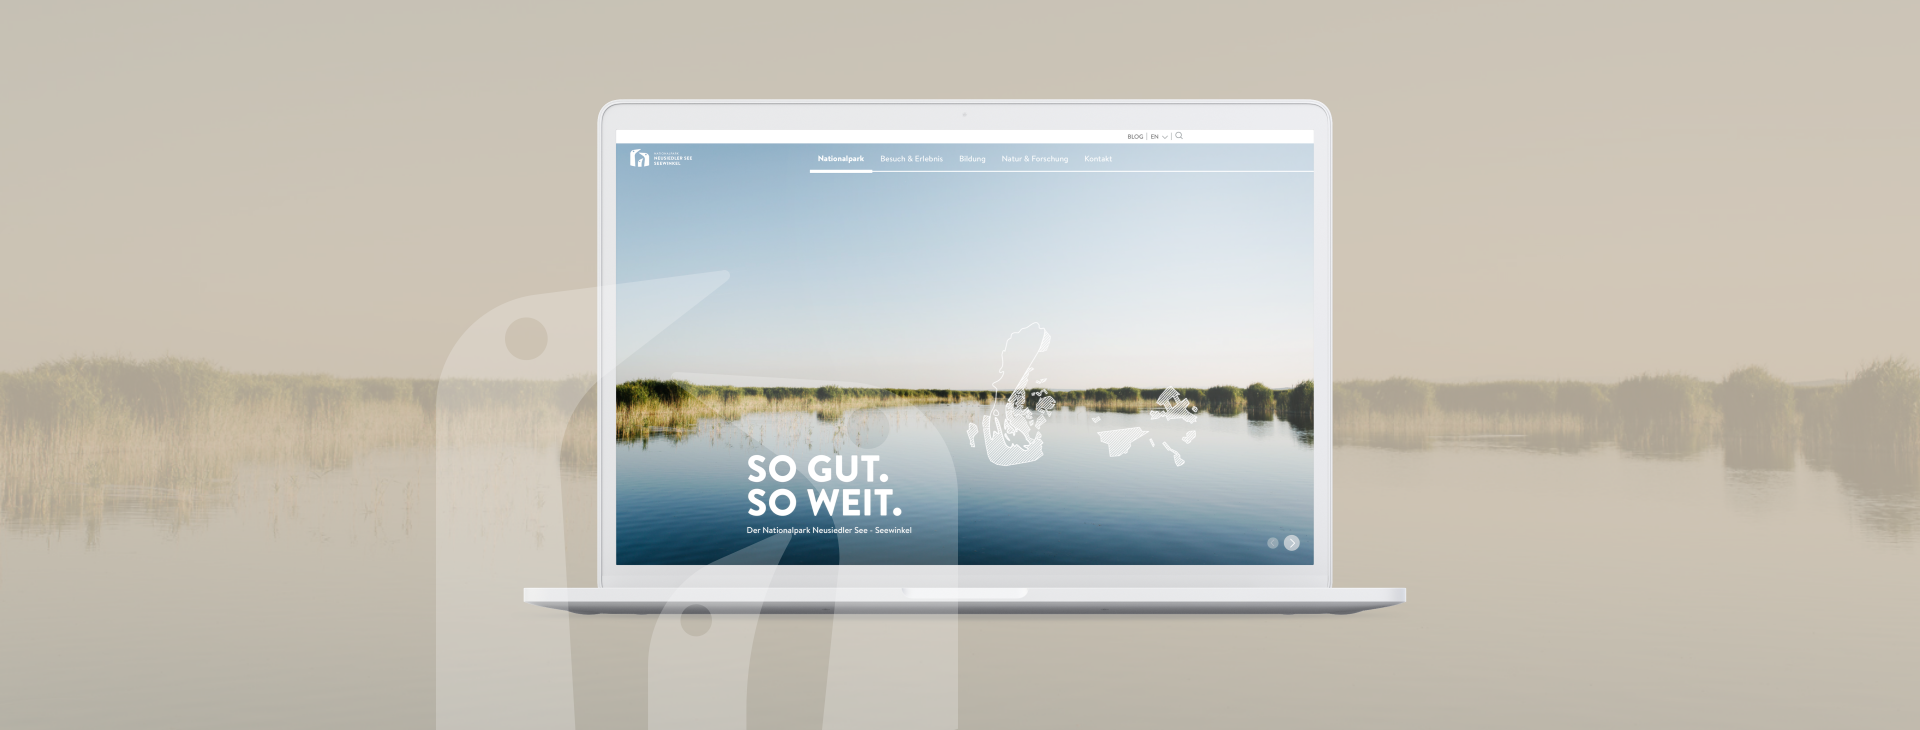 Nationalpark Neusiedlersee Seewinkel Website startpage